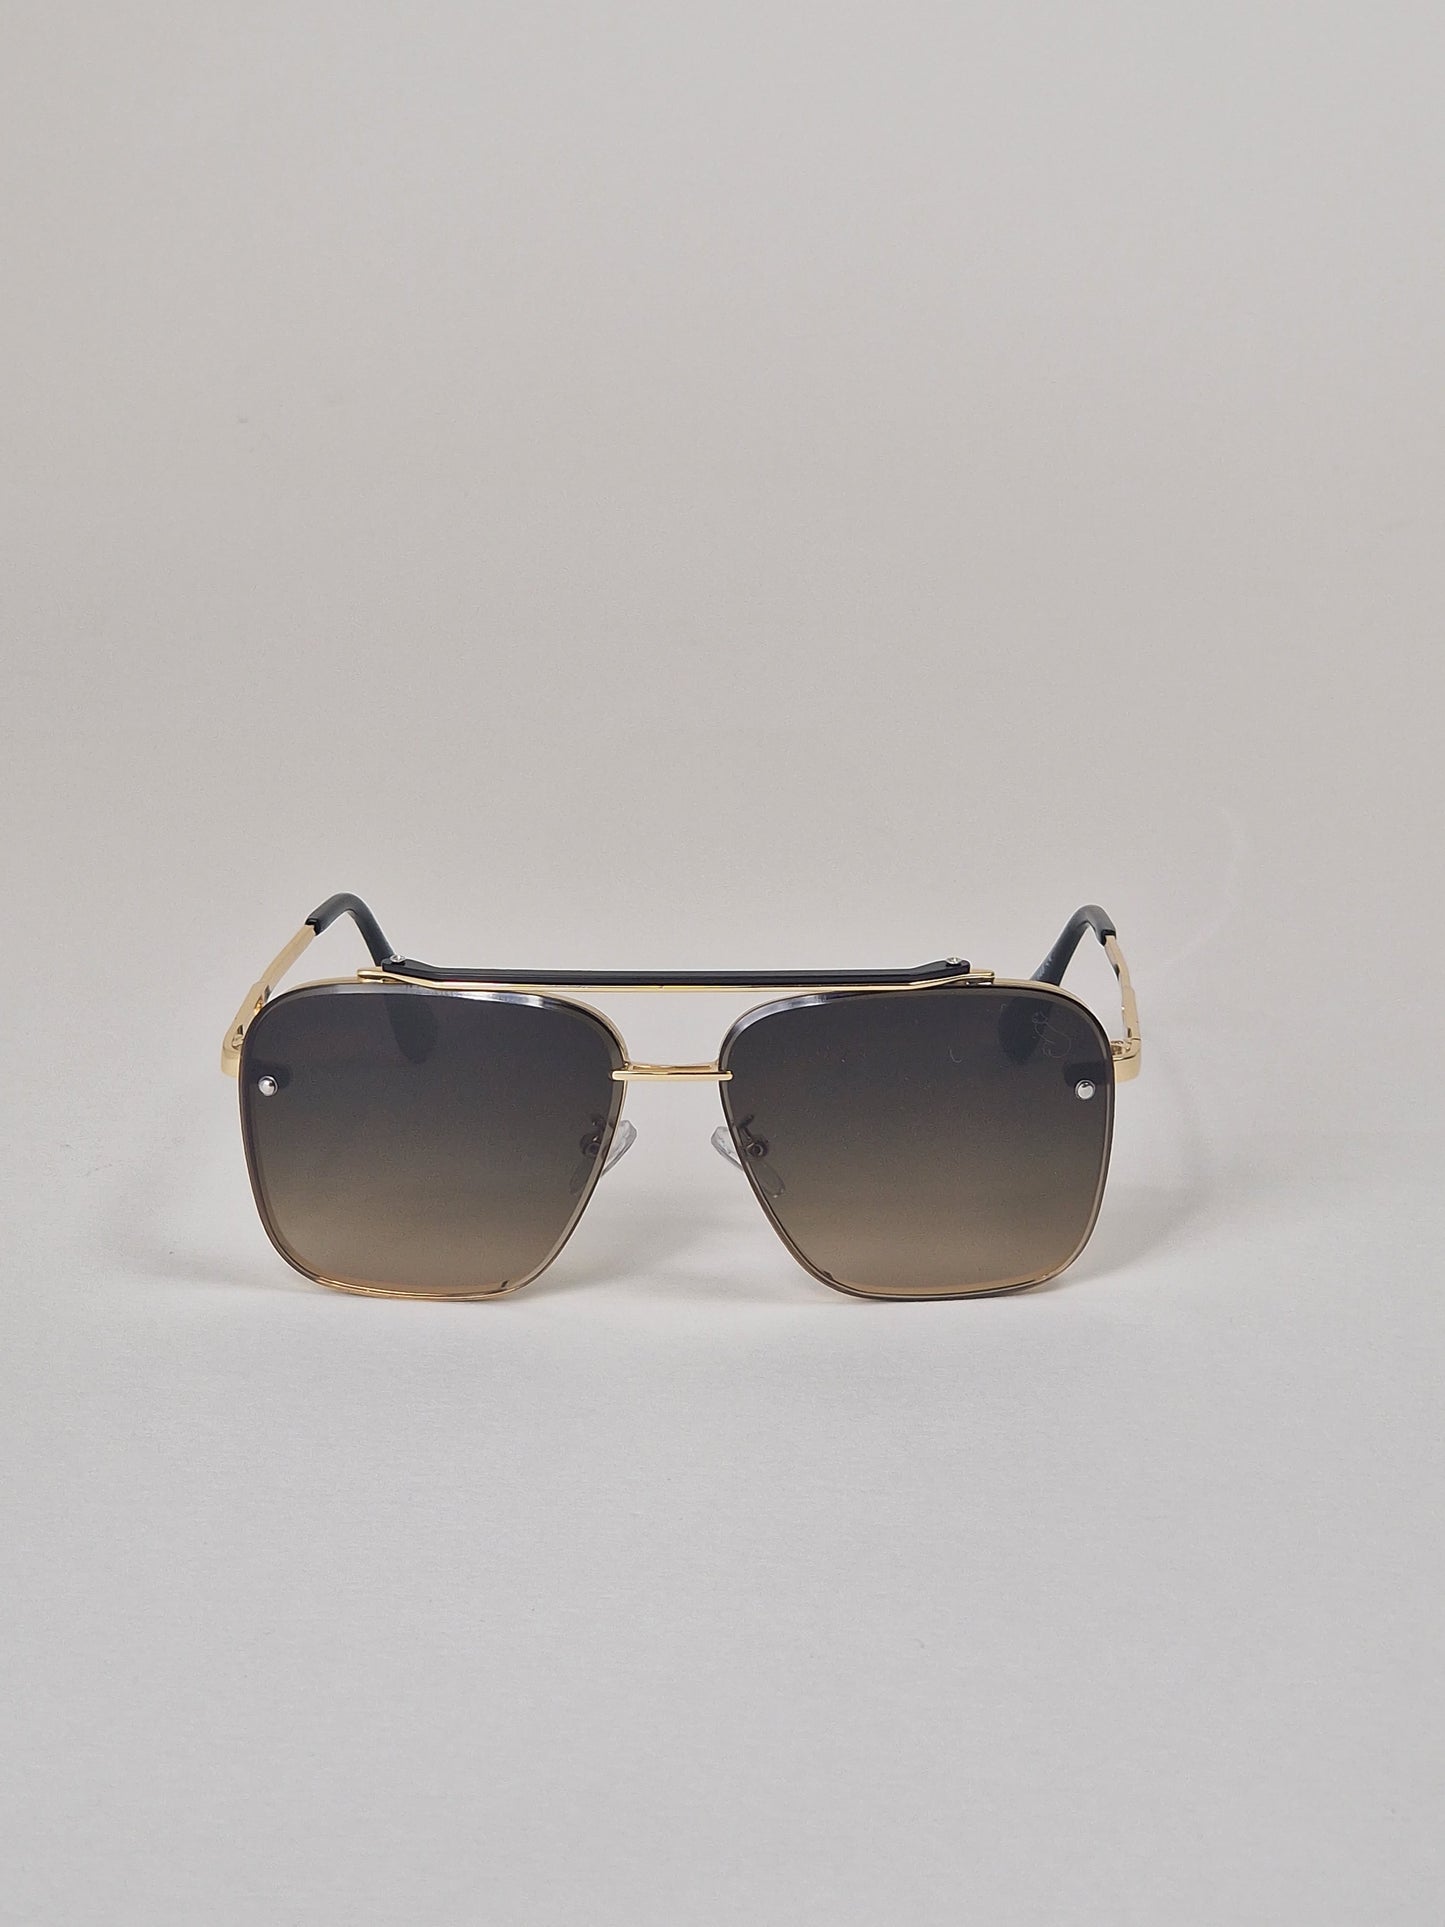 Solglasögon, svart/brun tintade.